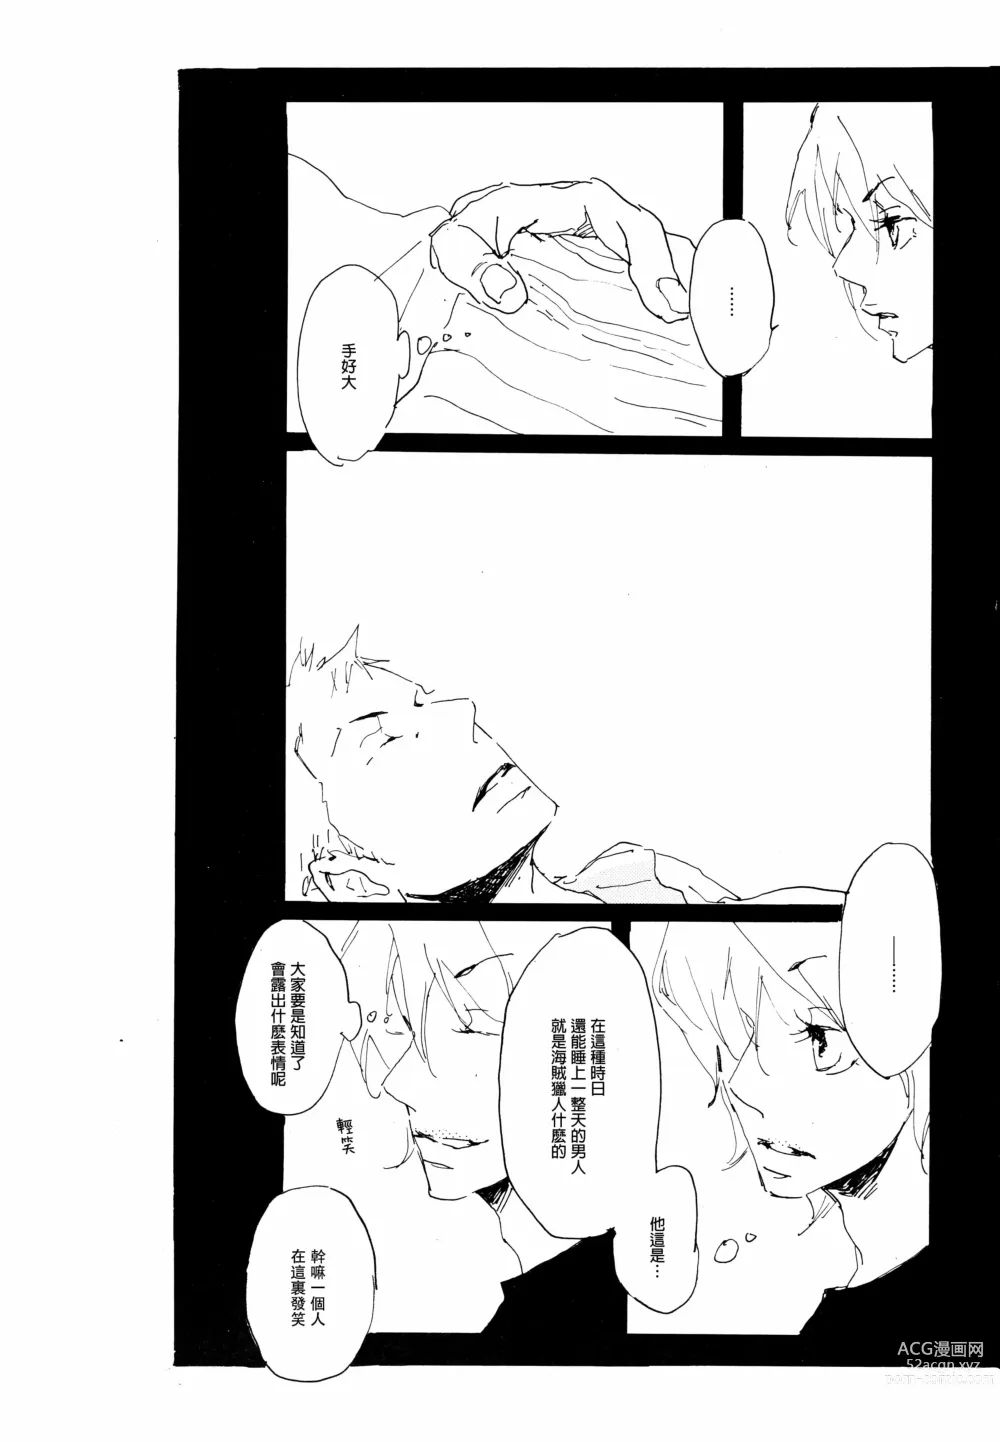 Page 14 of doujinshi 忧郁·与那份没有尽头的悲伤